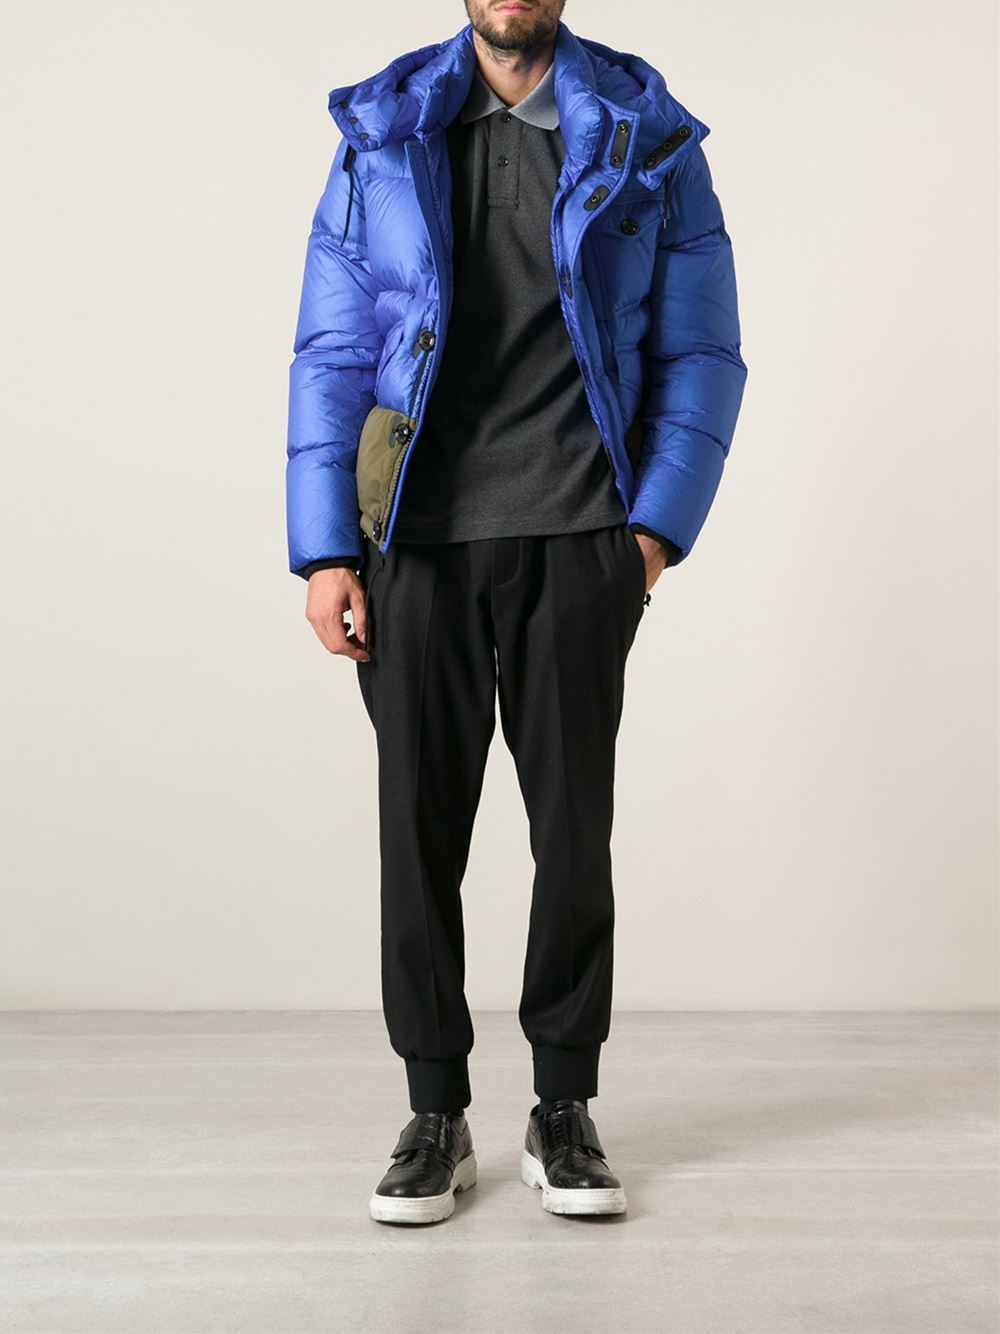 Moncler 'Chamonix' Jacket in Blue for Men - Lyst